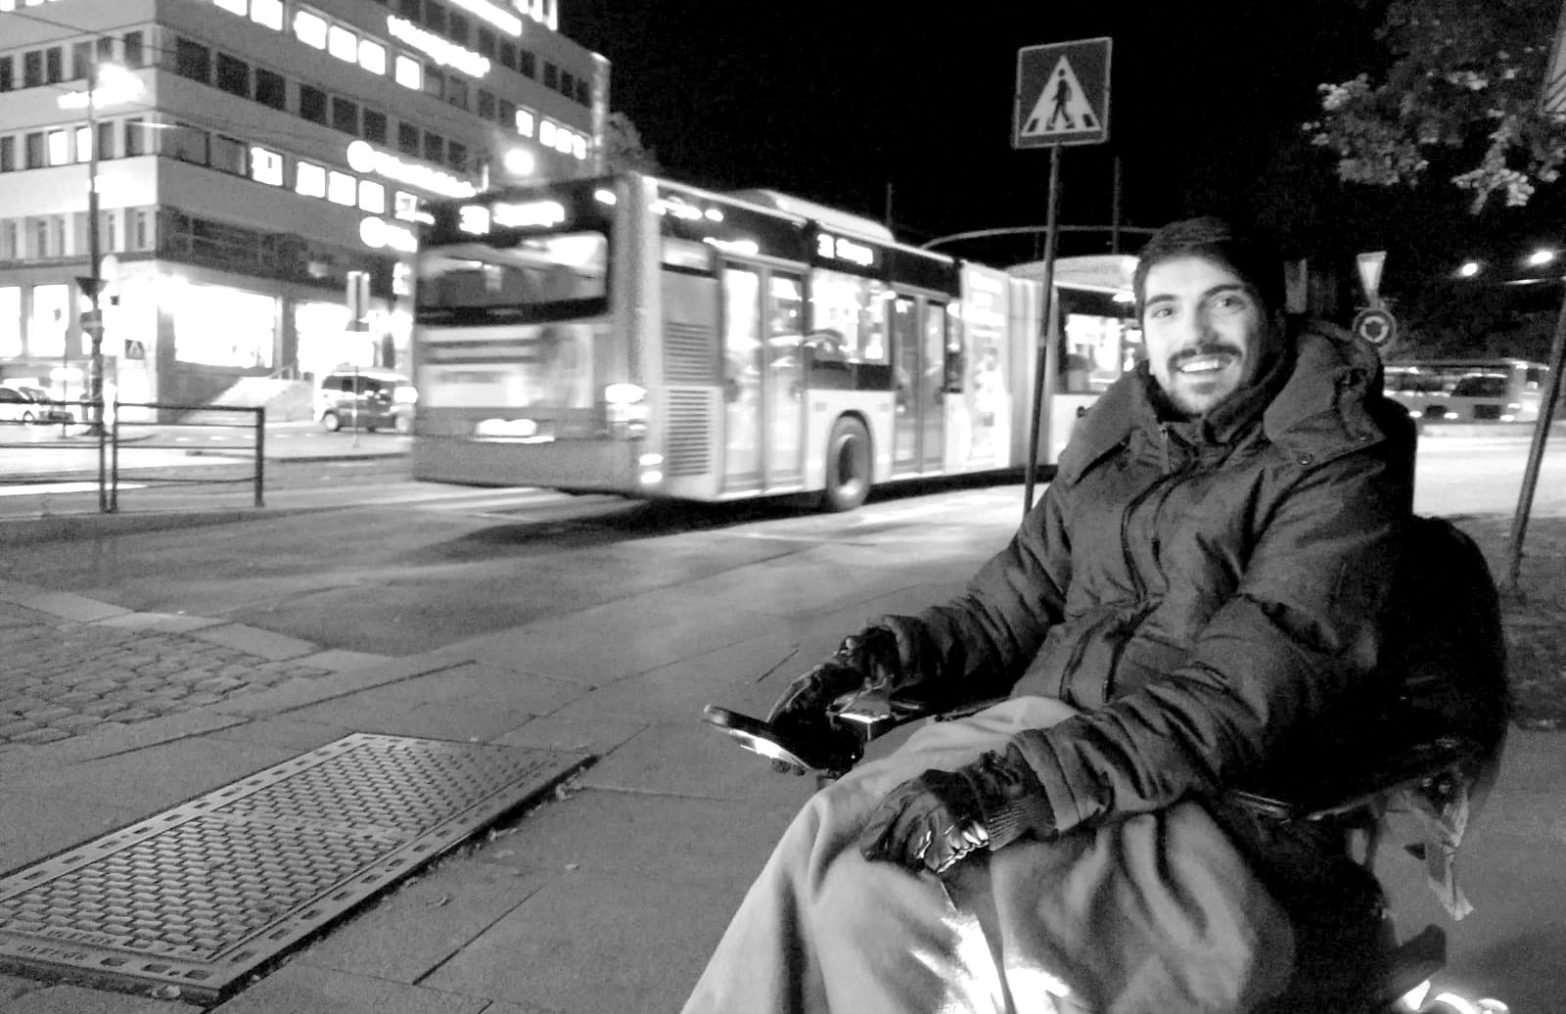 Amir i elektrisk rullestol på gata, med en buss i bakgrunnen.